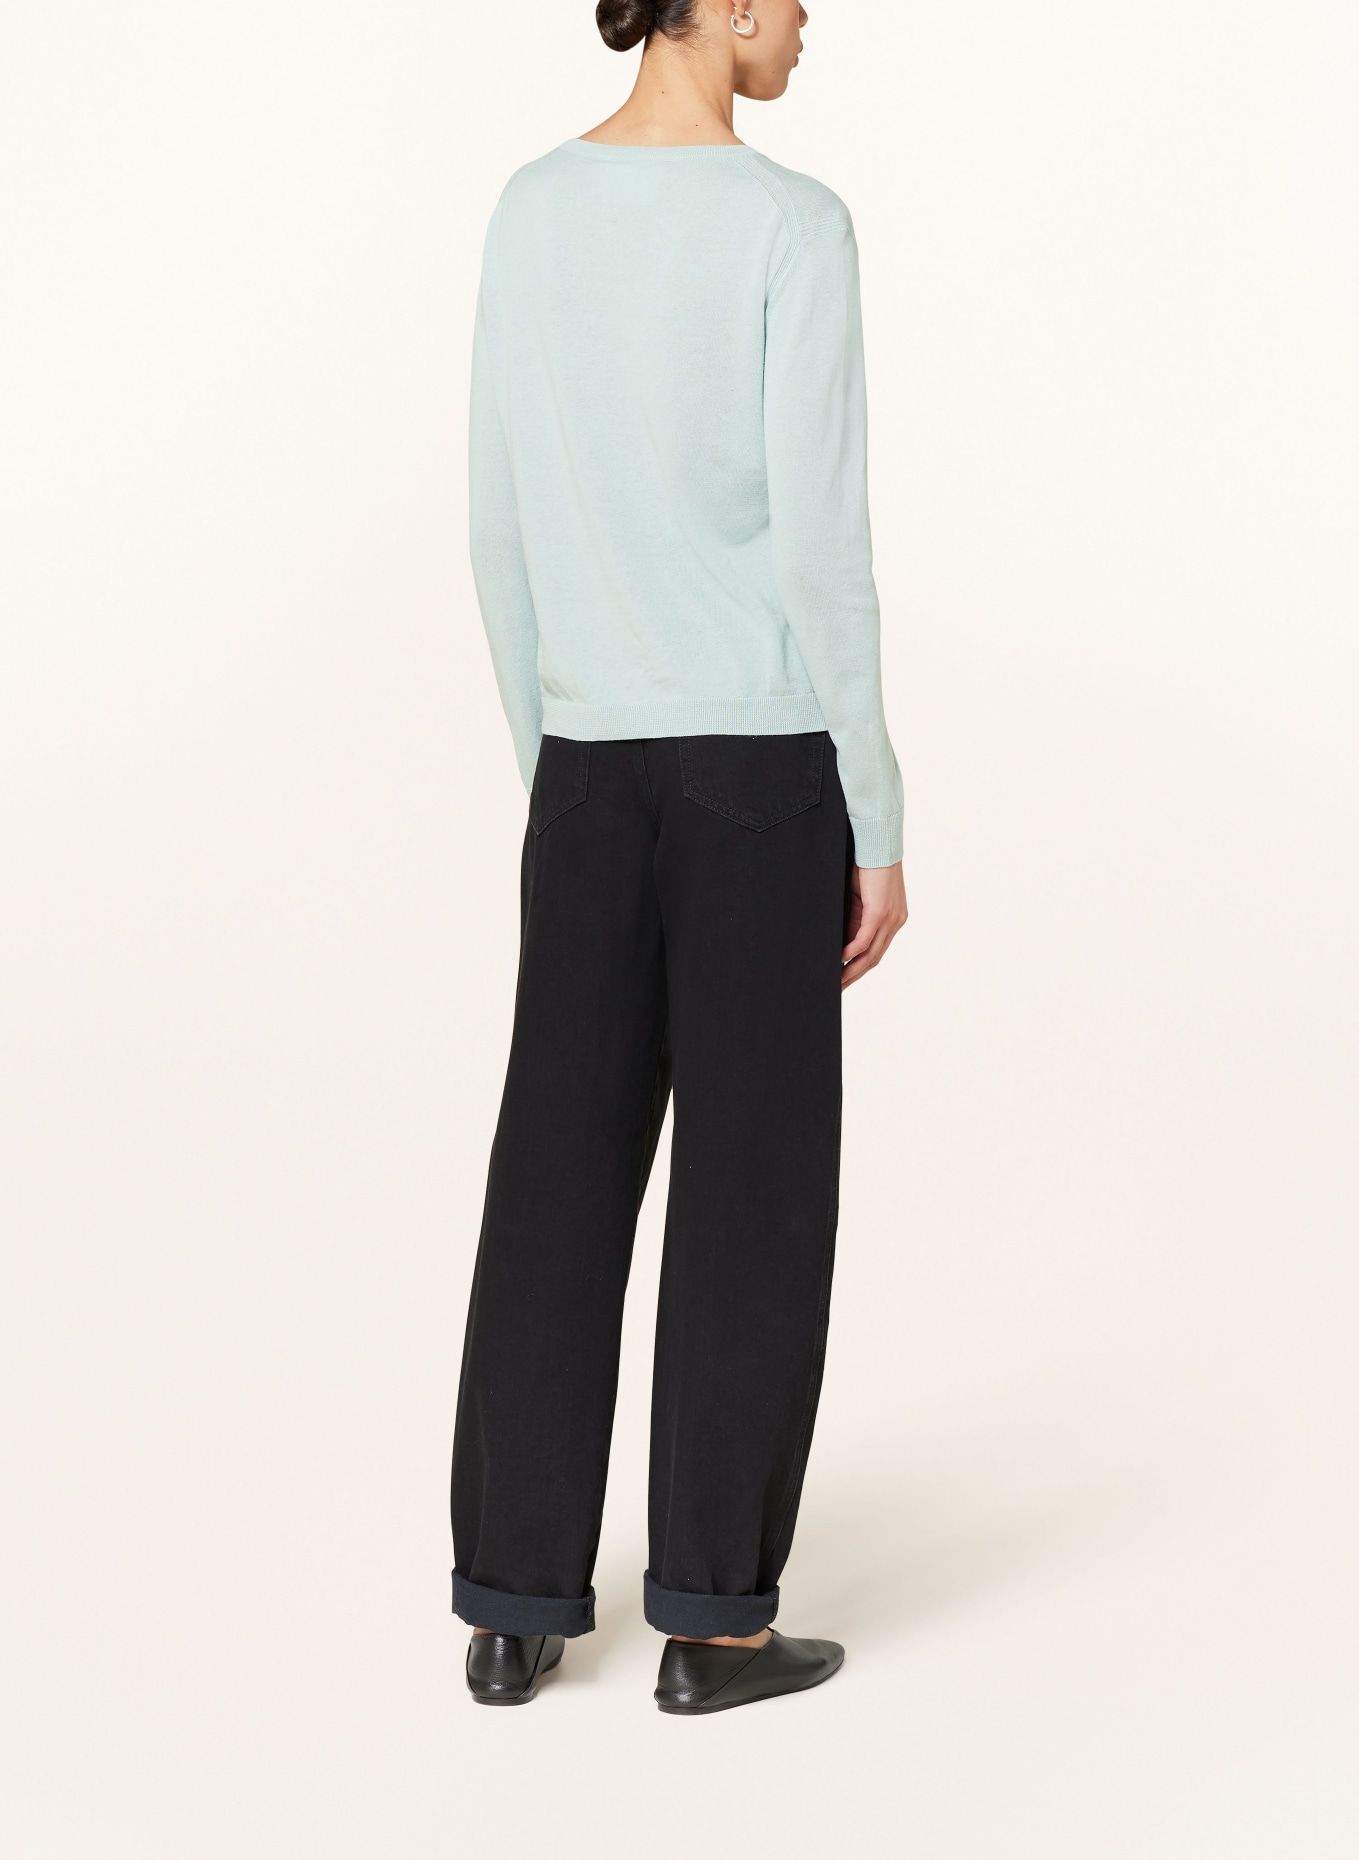 CLOSED Pullover mit Leinen, Farbe: MINT (Bild 3)